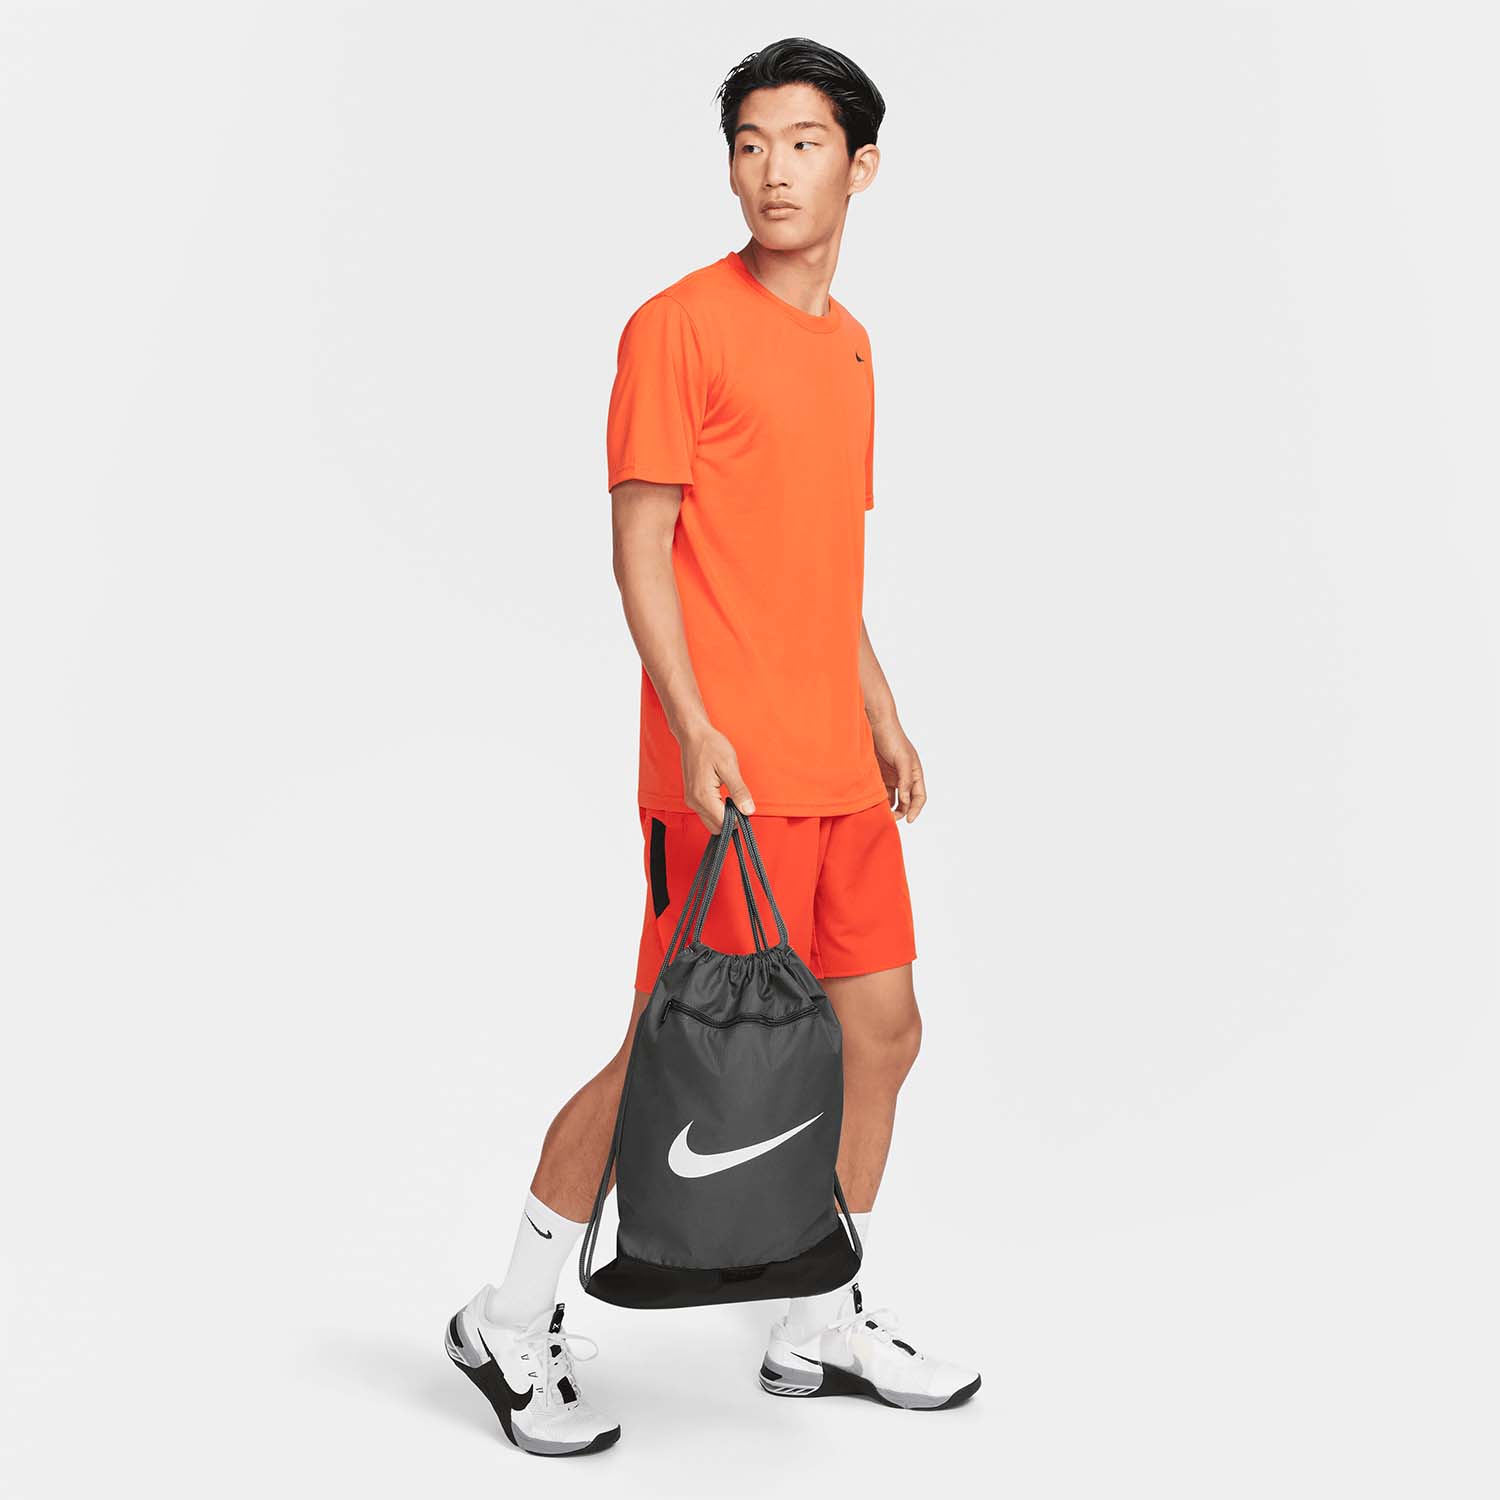 Nike Brasilia 9.5 Sackpack - Iron Grey/Black/White